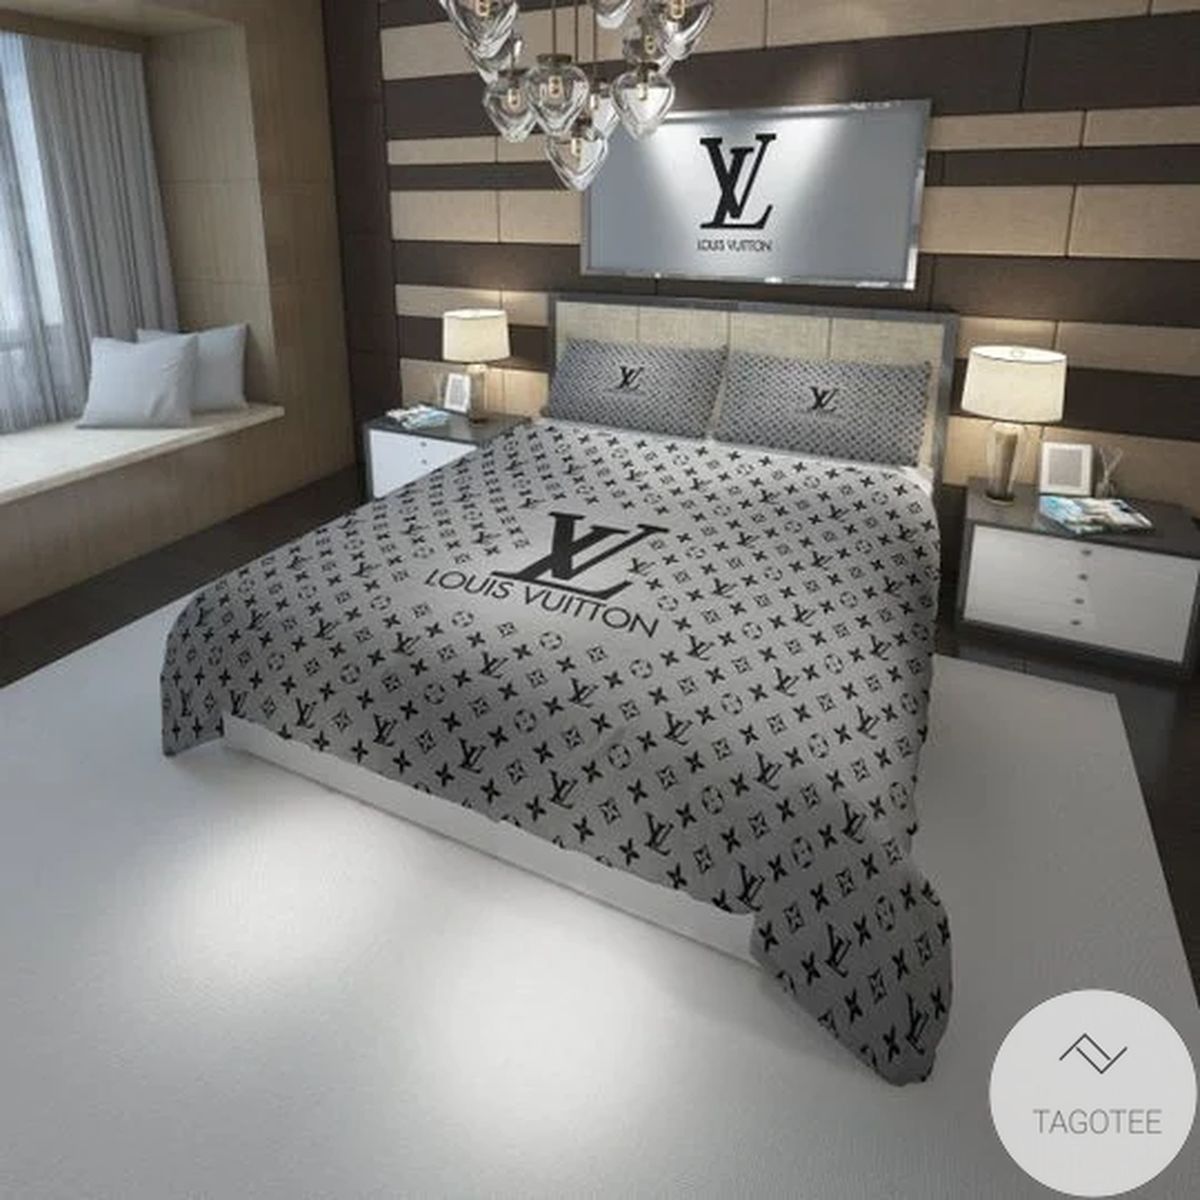 Louis Vuitton Brand Printed Bedding Set